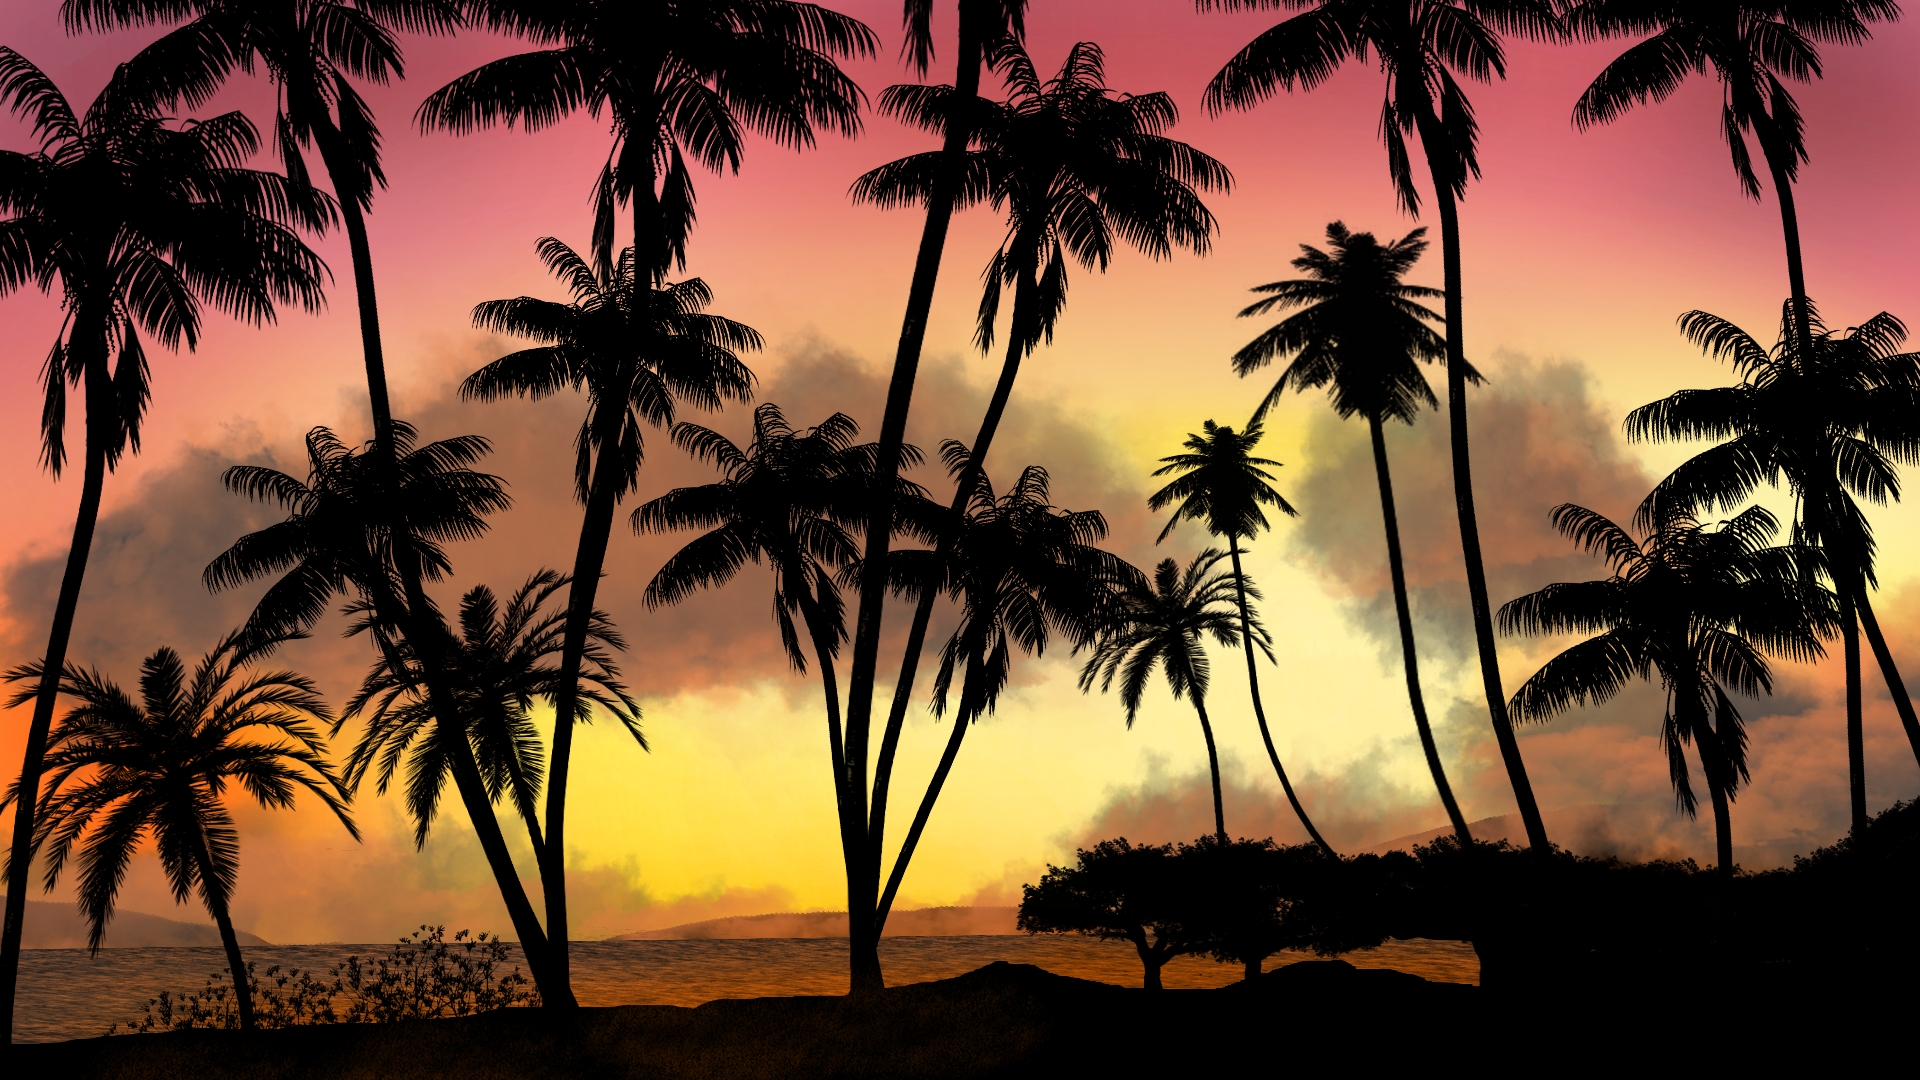 Digital Painting Digital Art Landscape Nature Tropical Colorful Palm Trees Silhouette Sunset Sunset  1920x1080